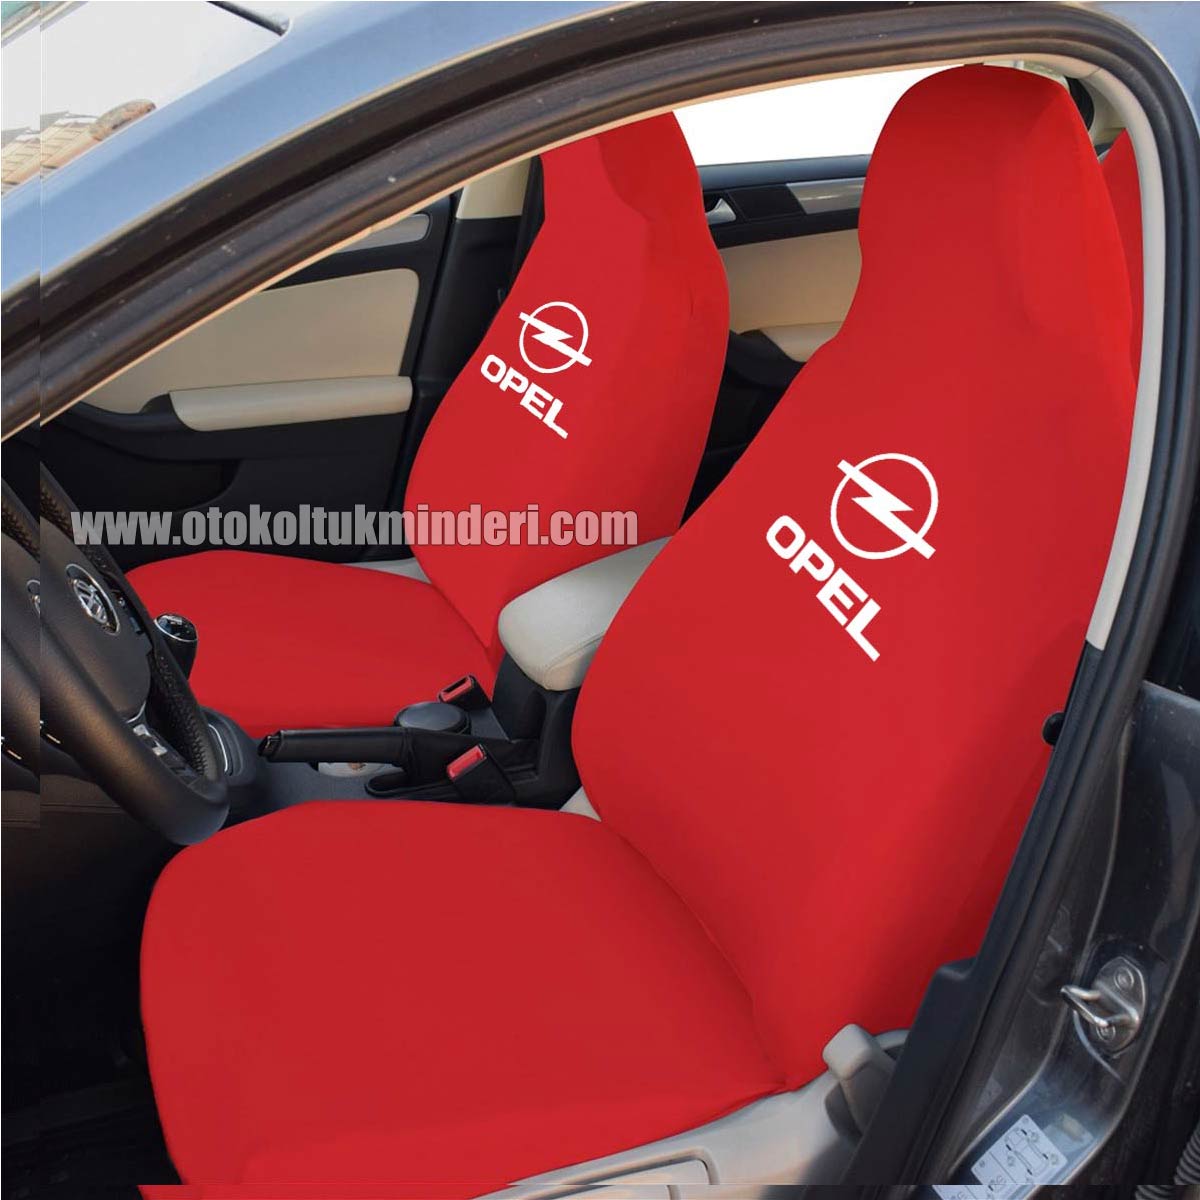 Opel Servis Kılıfı Kırmızı Oto Koltuk Minderi